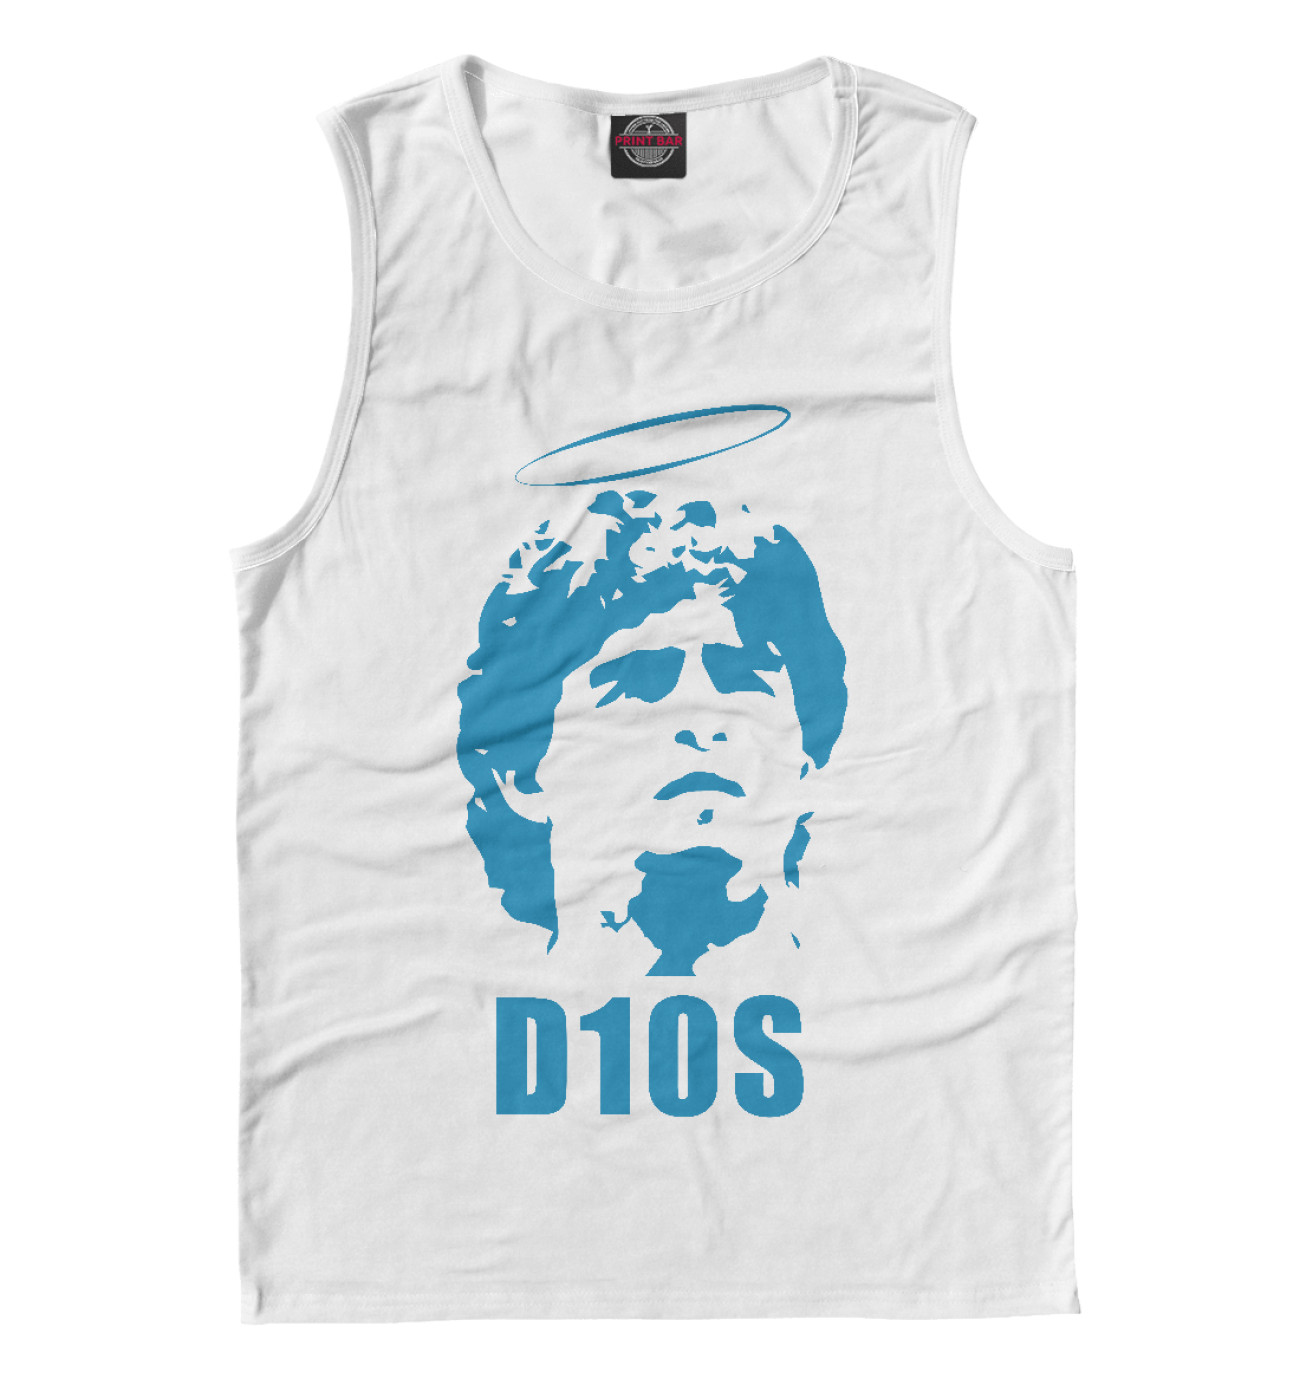 Мужская Майка Diego Maradona, артикул: FLT-916349-may-2